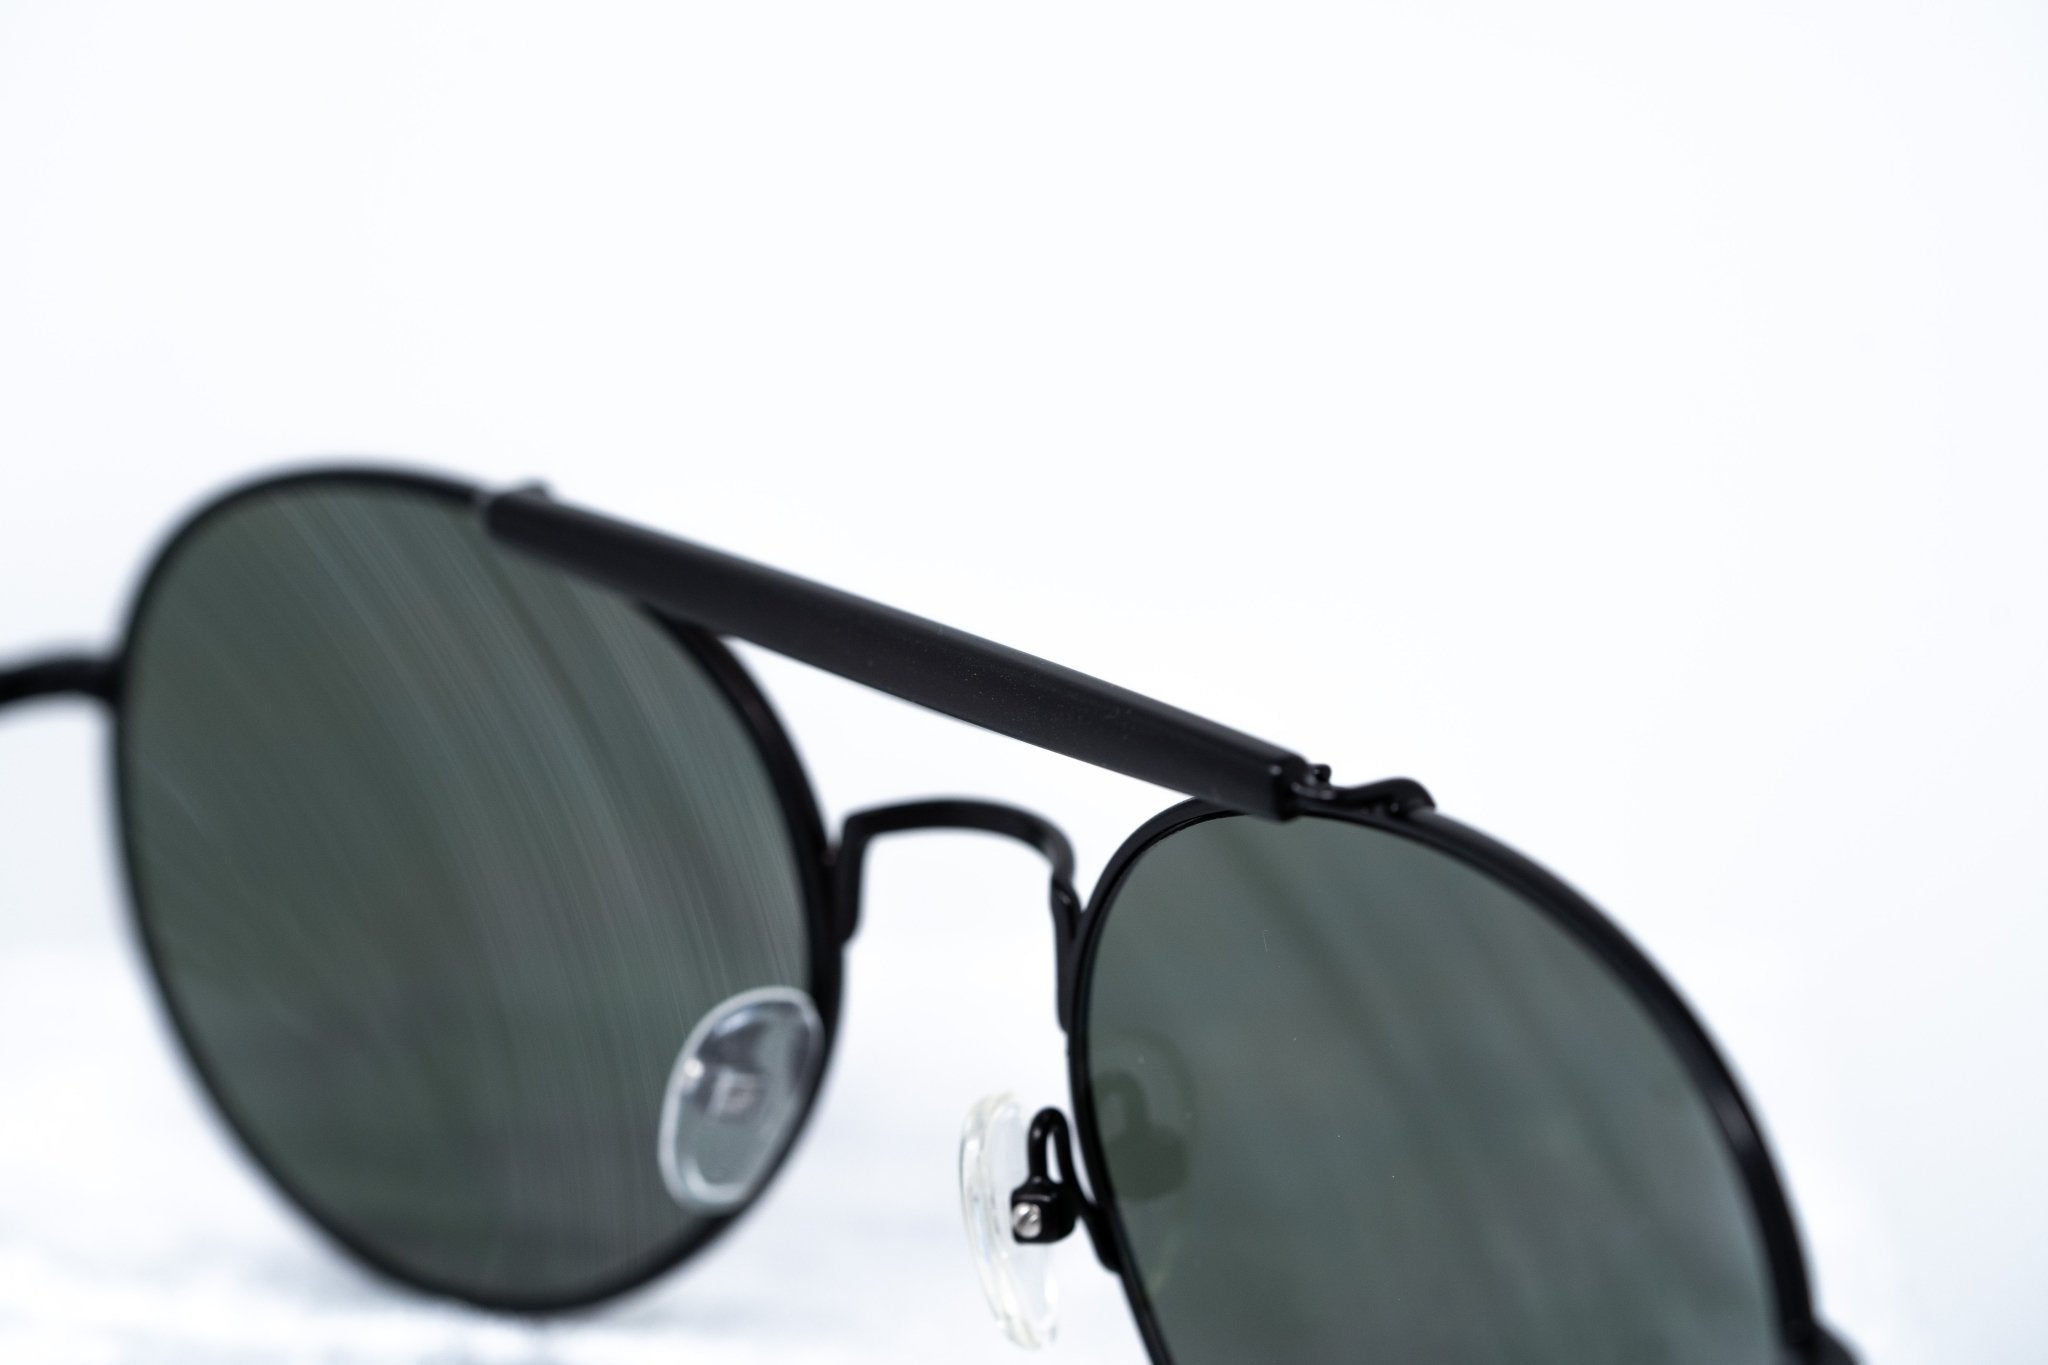 Yohji Yamamoto Unisex Sunglasses Round Black and Dark Grey Lenses Category 3 - YY12RIDERC3SUN - Watches & Crystals